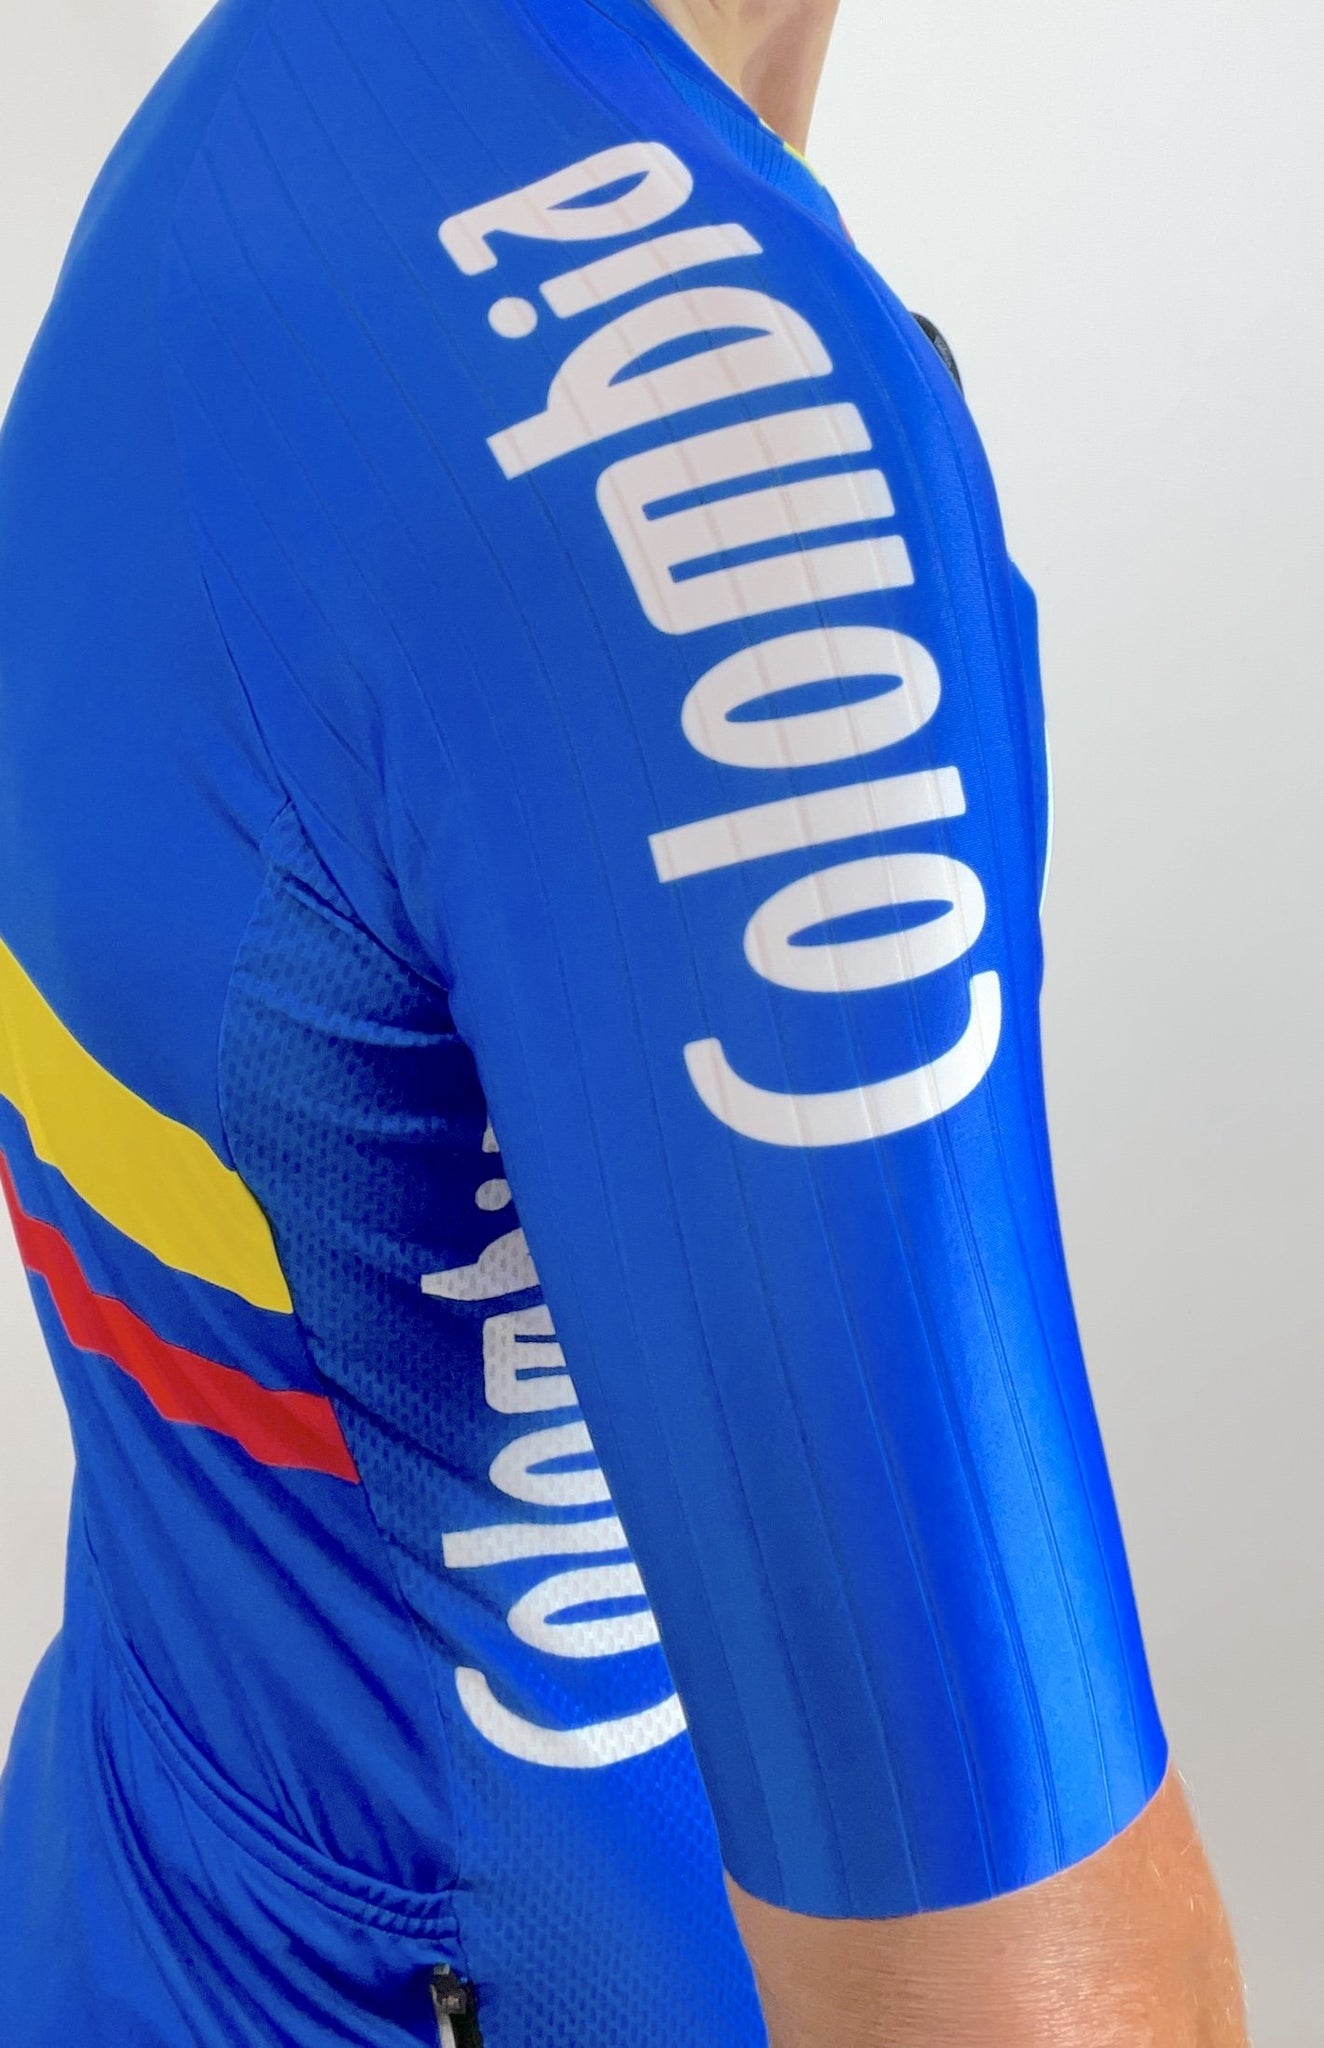 Suarez Classic Colombia Federation 2.0 2021 Long Sleeve BMX Jersey, Blue